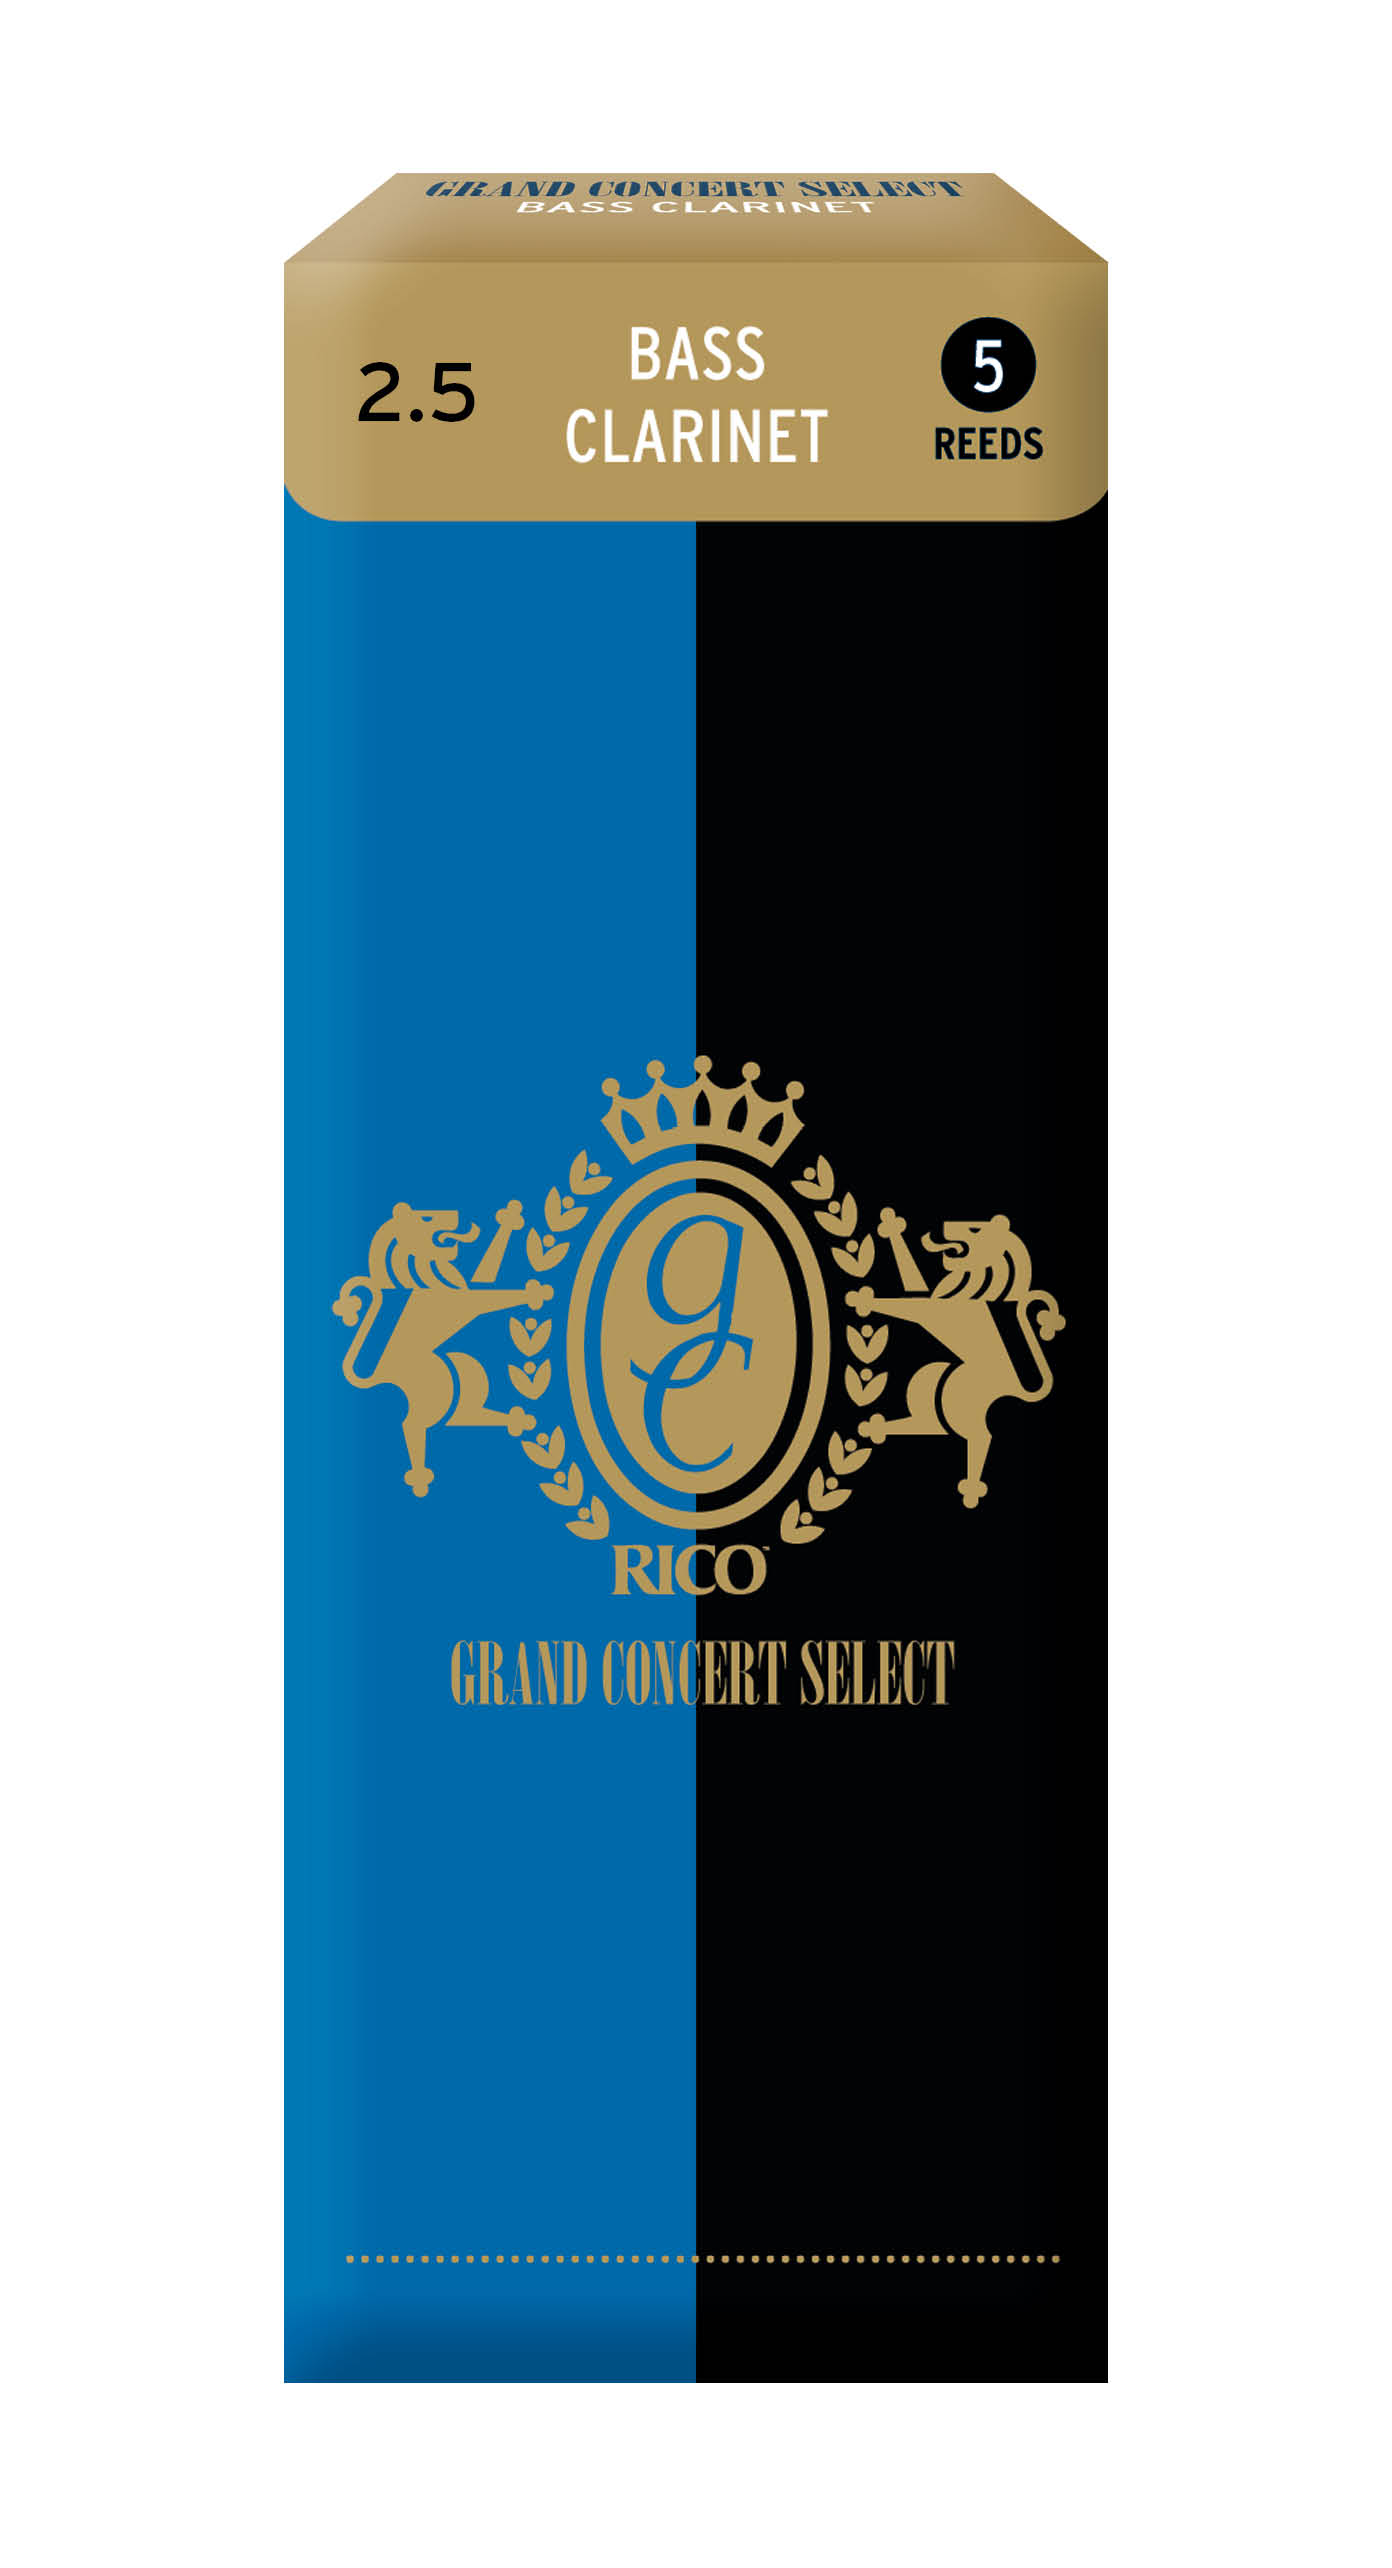 D'Addario Grand Concert Select Bass Clarinet Reeds, Strength 2.5, 5 Pack